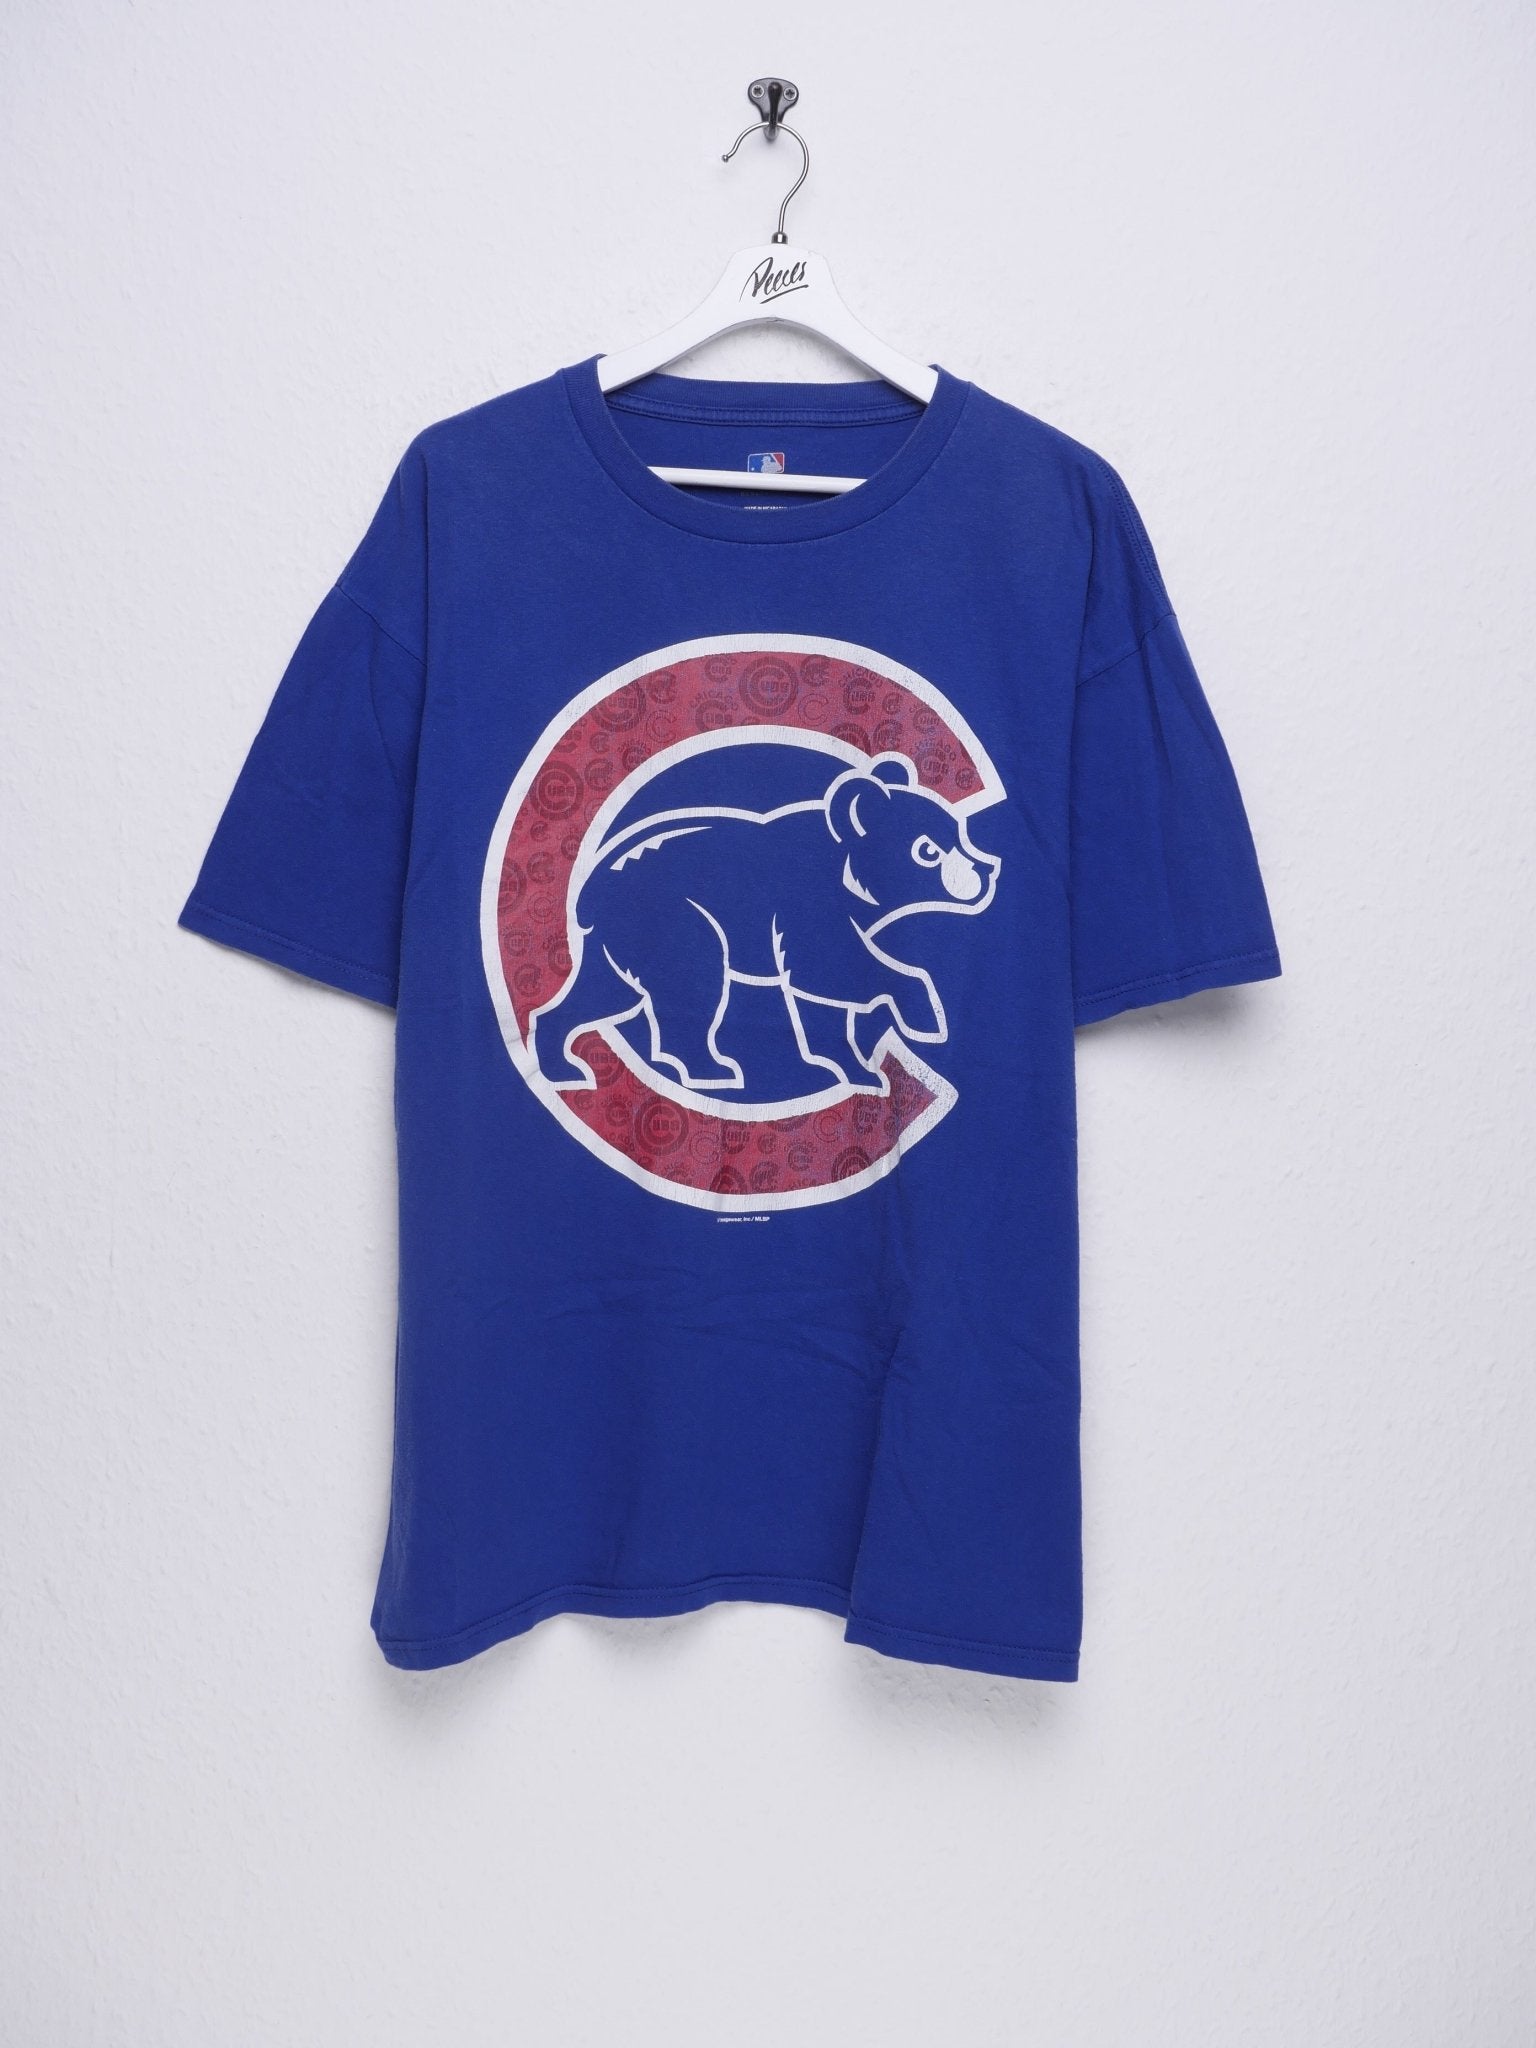 MLB printed Chicago Bears Logo Vintage Shirt - Peeces